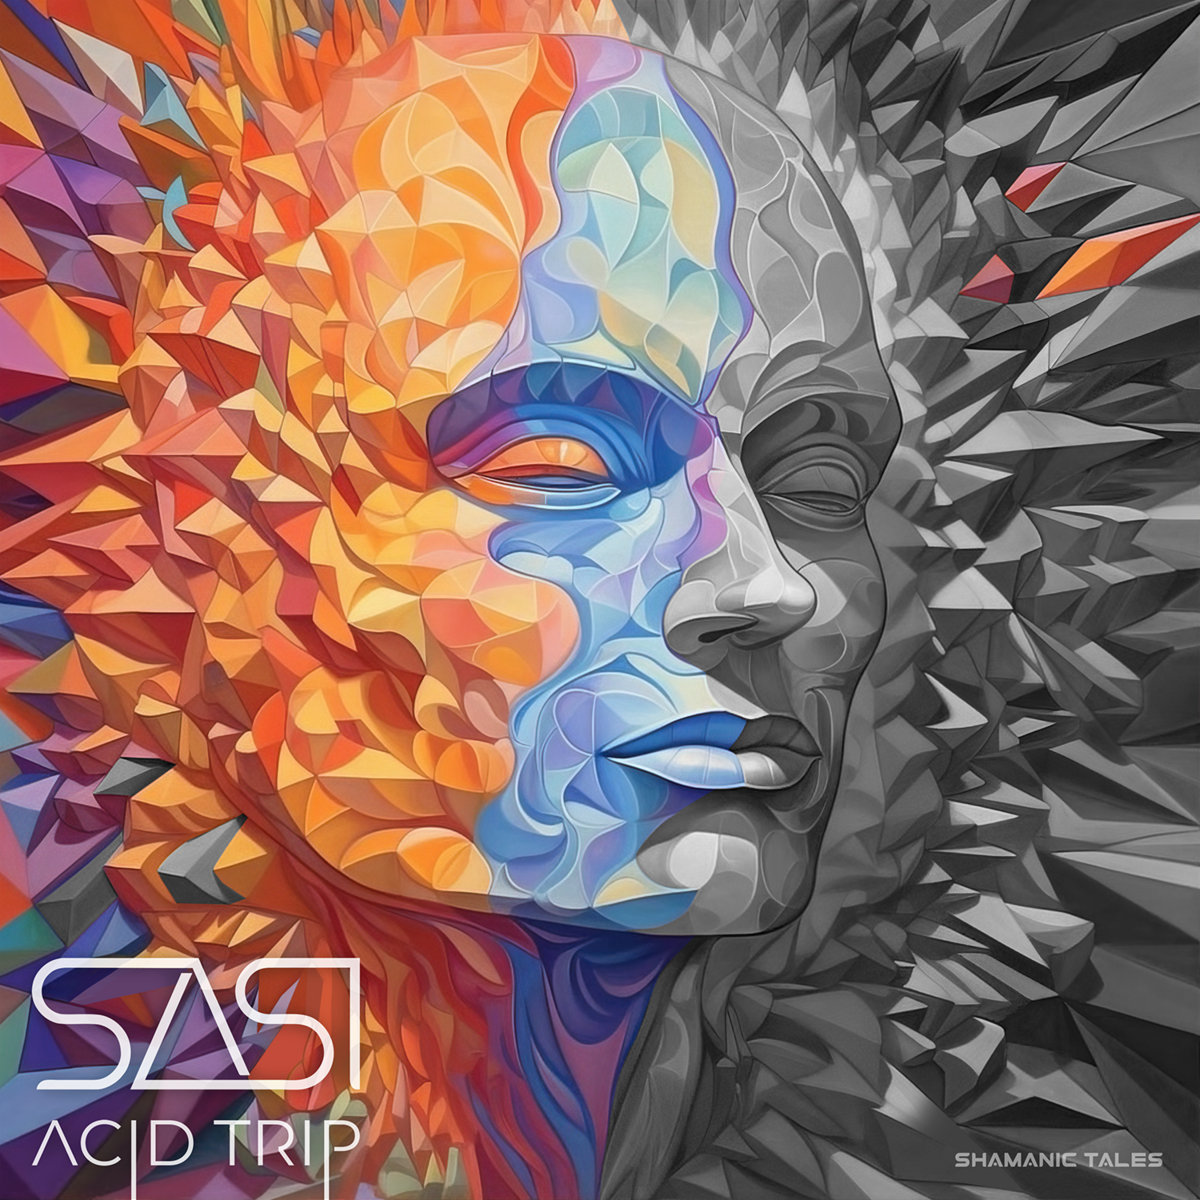 Acid Trip | Sasi | Shamanic Tales